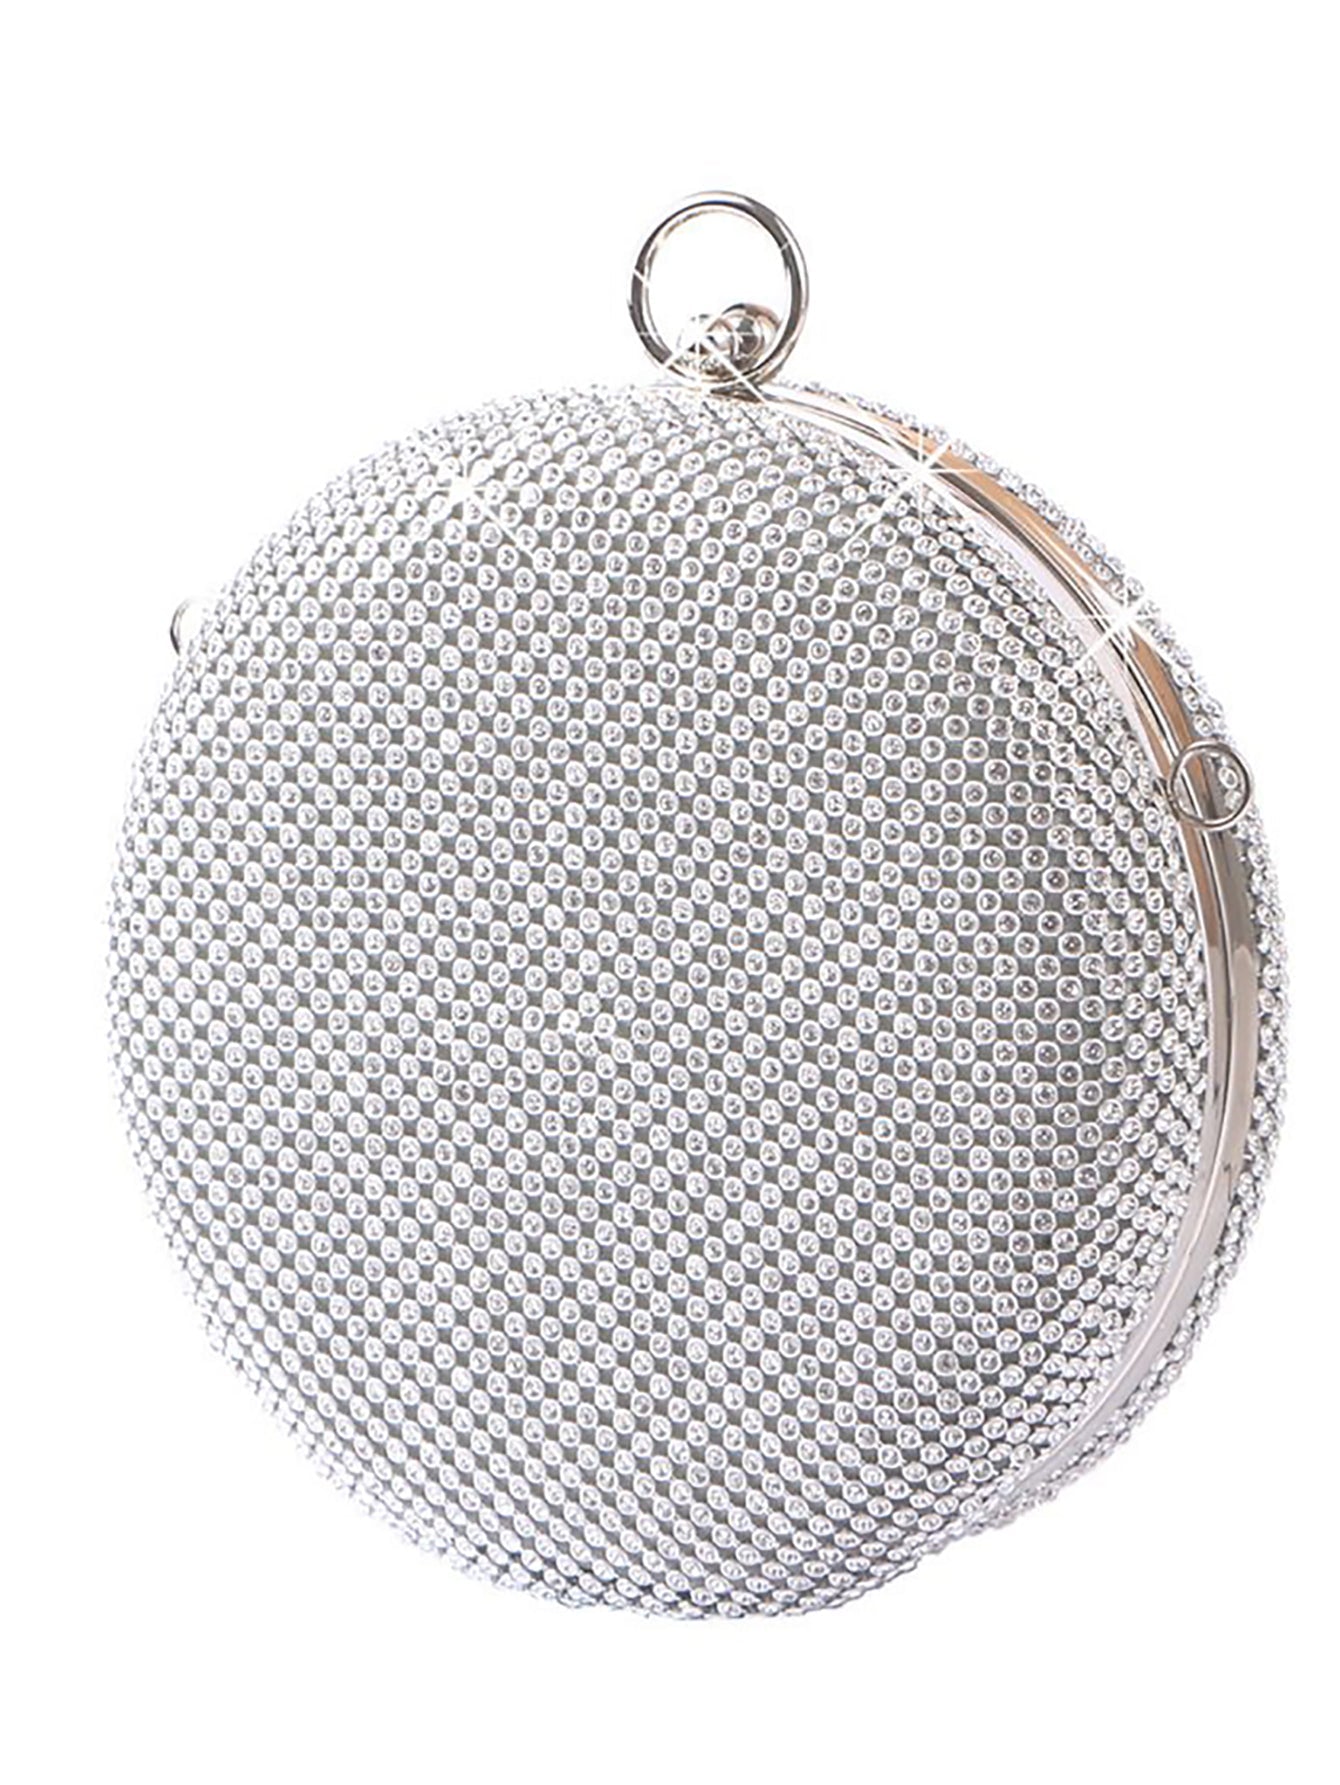 Silver Exquisite Round Party Handbag